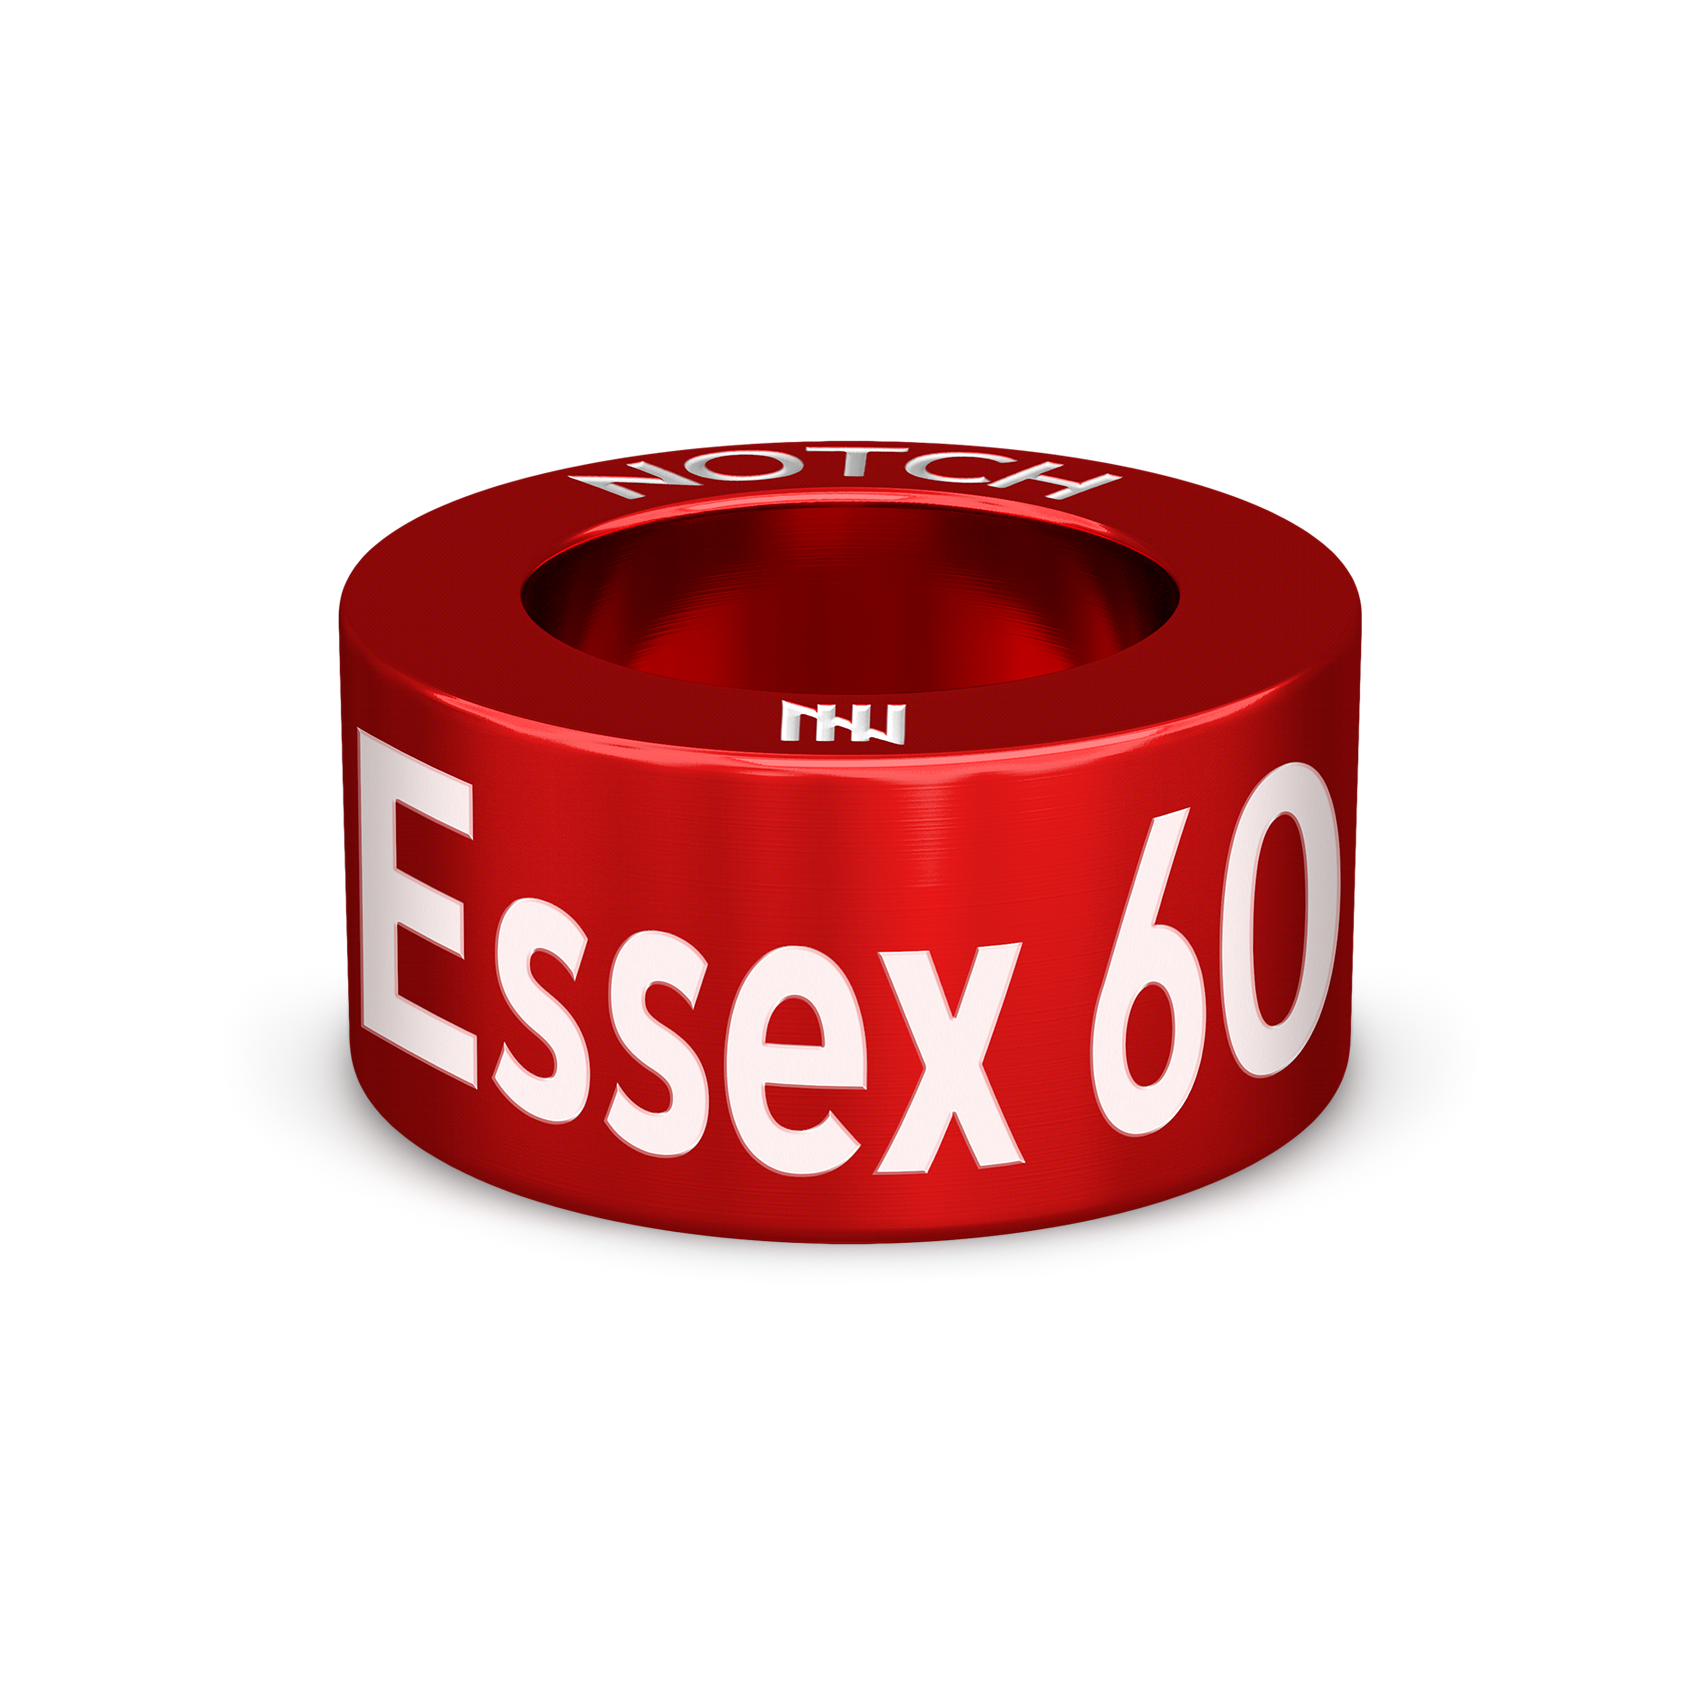 RideLondon-Essex 60 NOTCH Charm